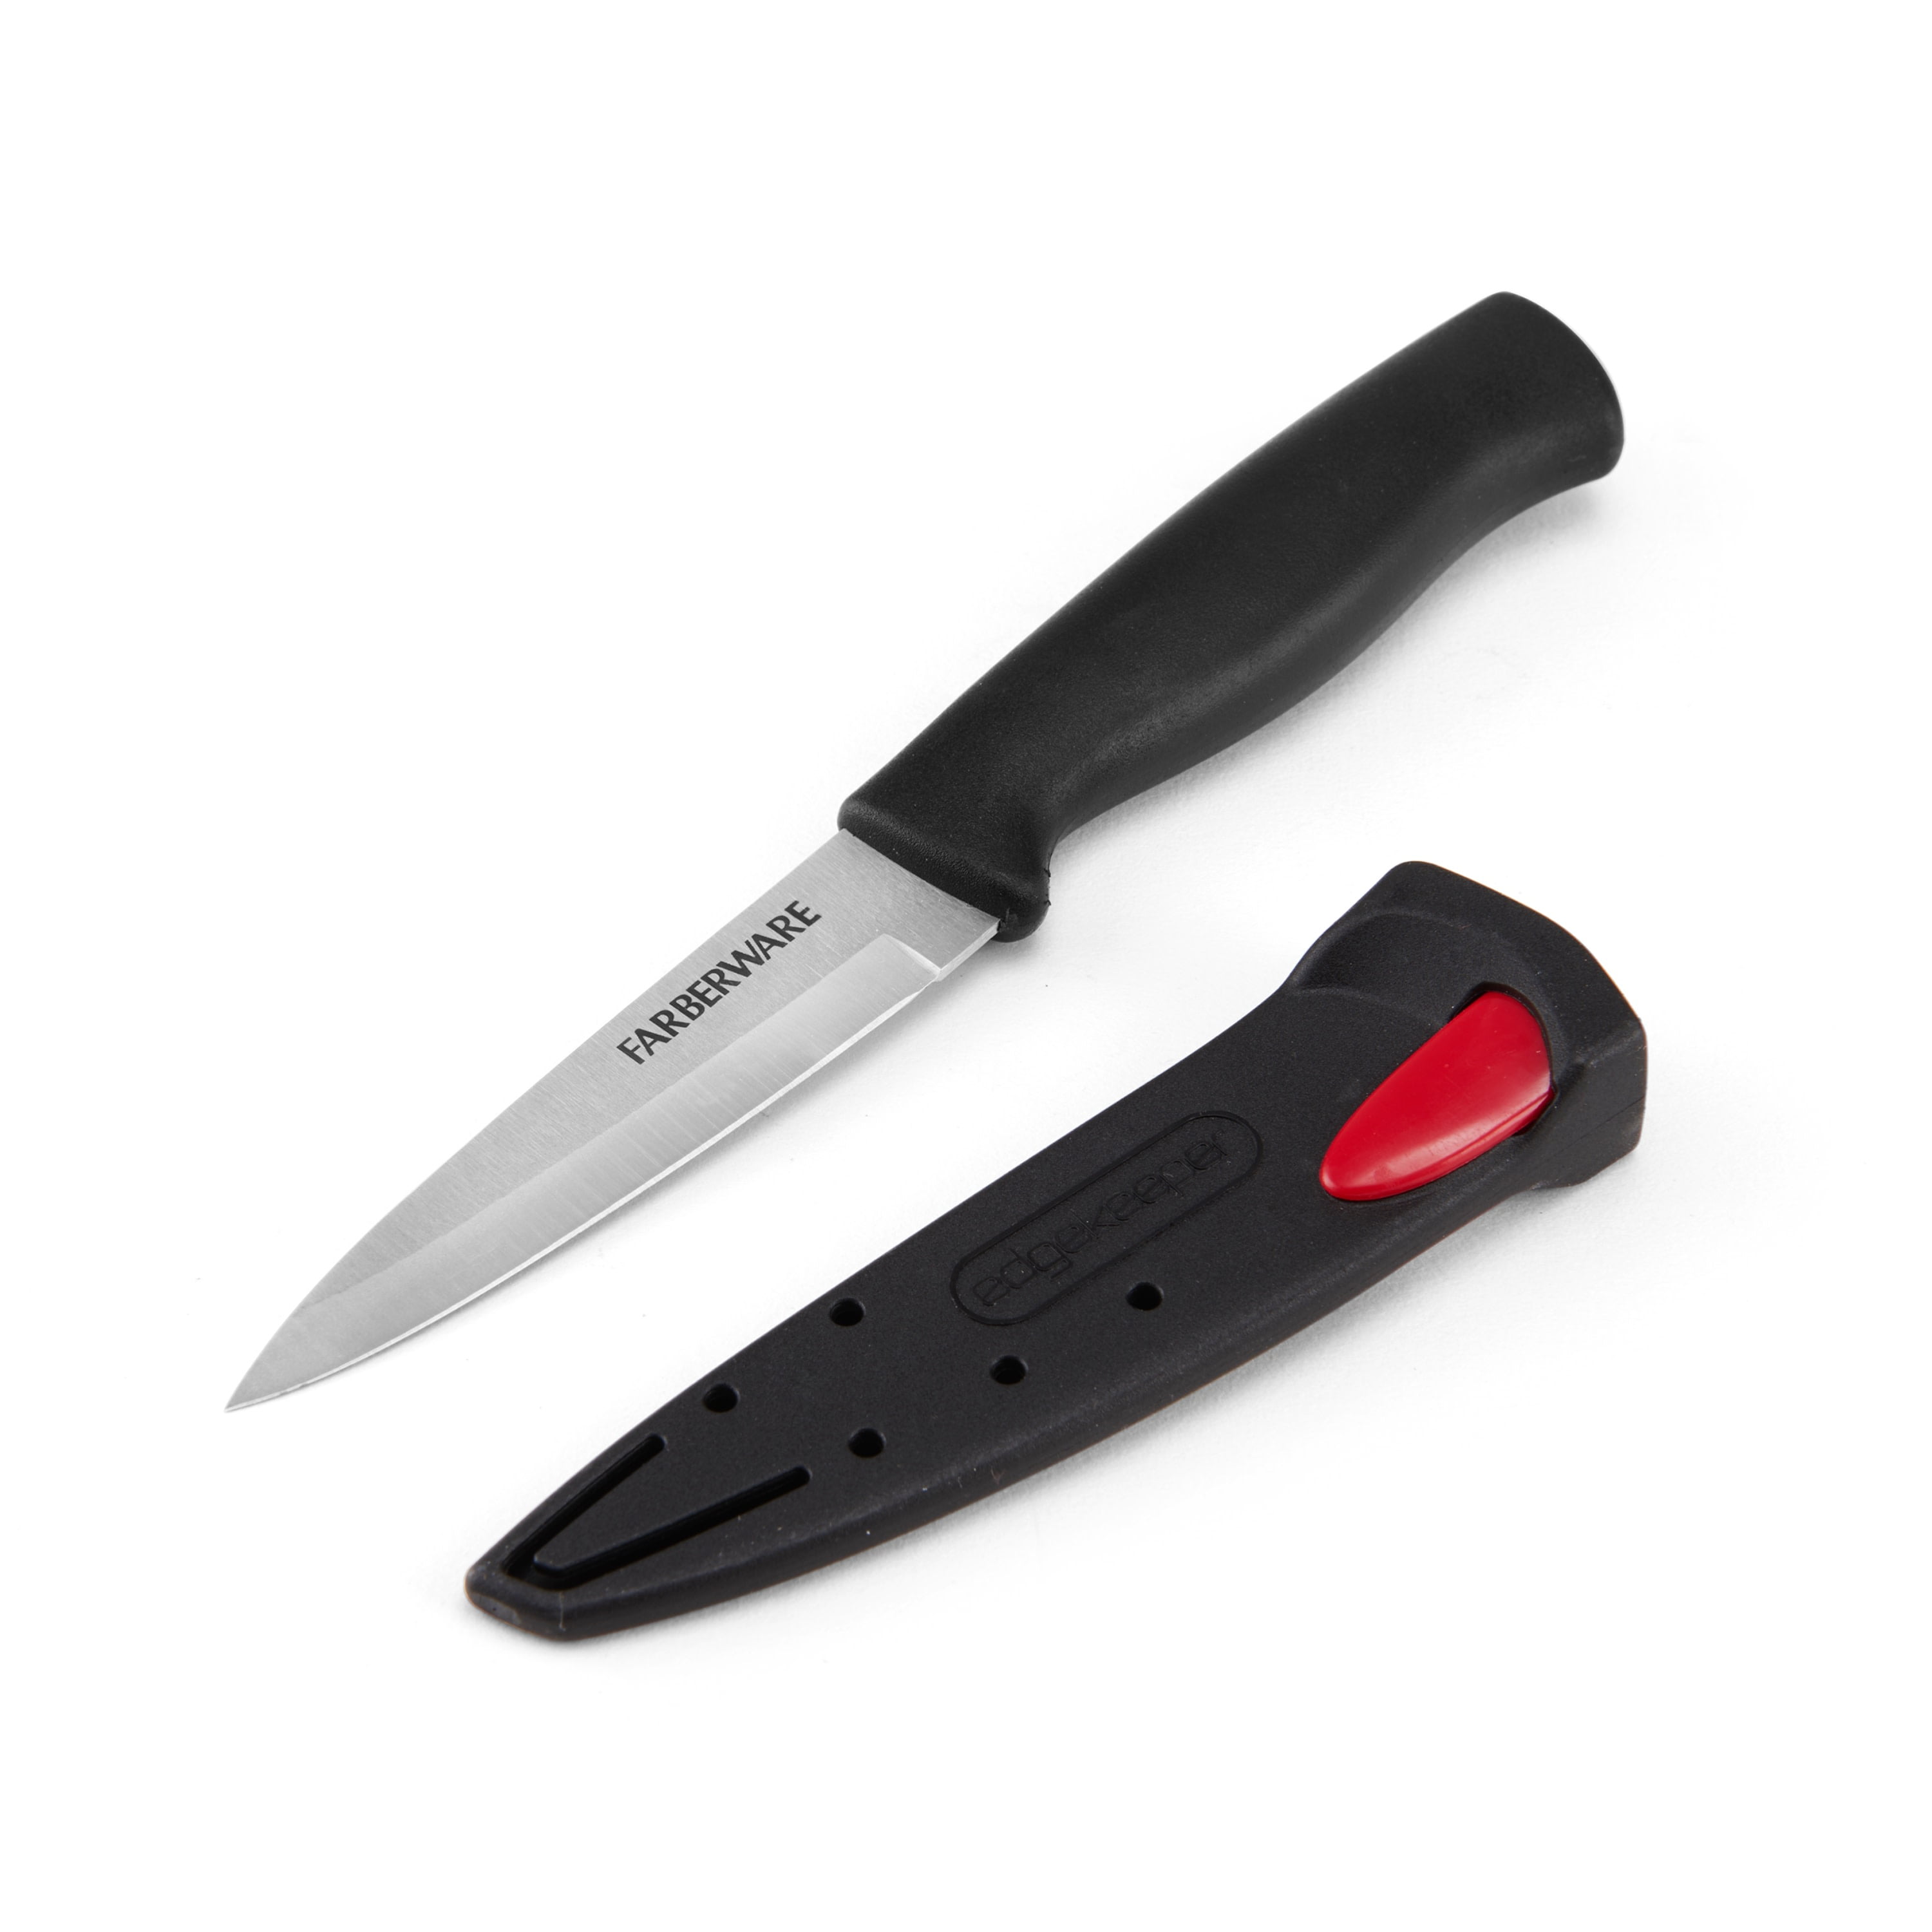 Farberware Edgekeeper 3 Stage Tabletop Kitchen Knife and Shear Sharpener,  7.5-Inch, Black